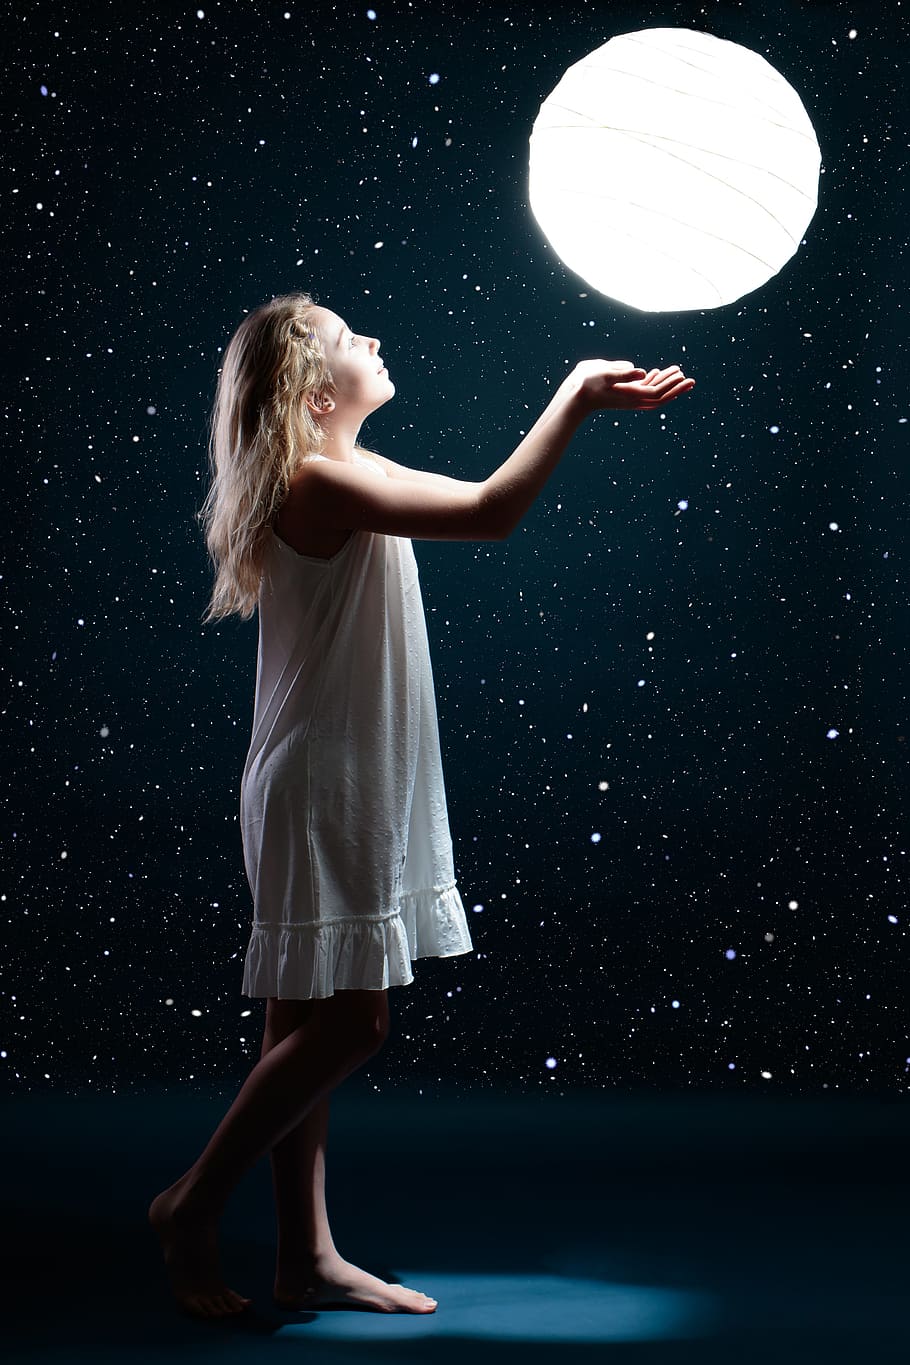 girl, wearing, whit sleeveless dress, looking, round, white, hanging, paper lamp, moon, star